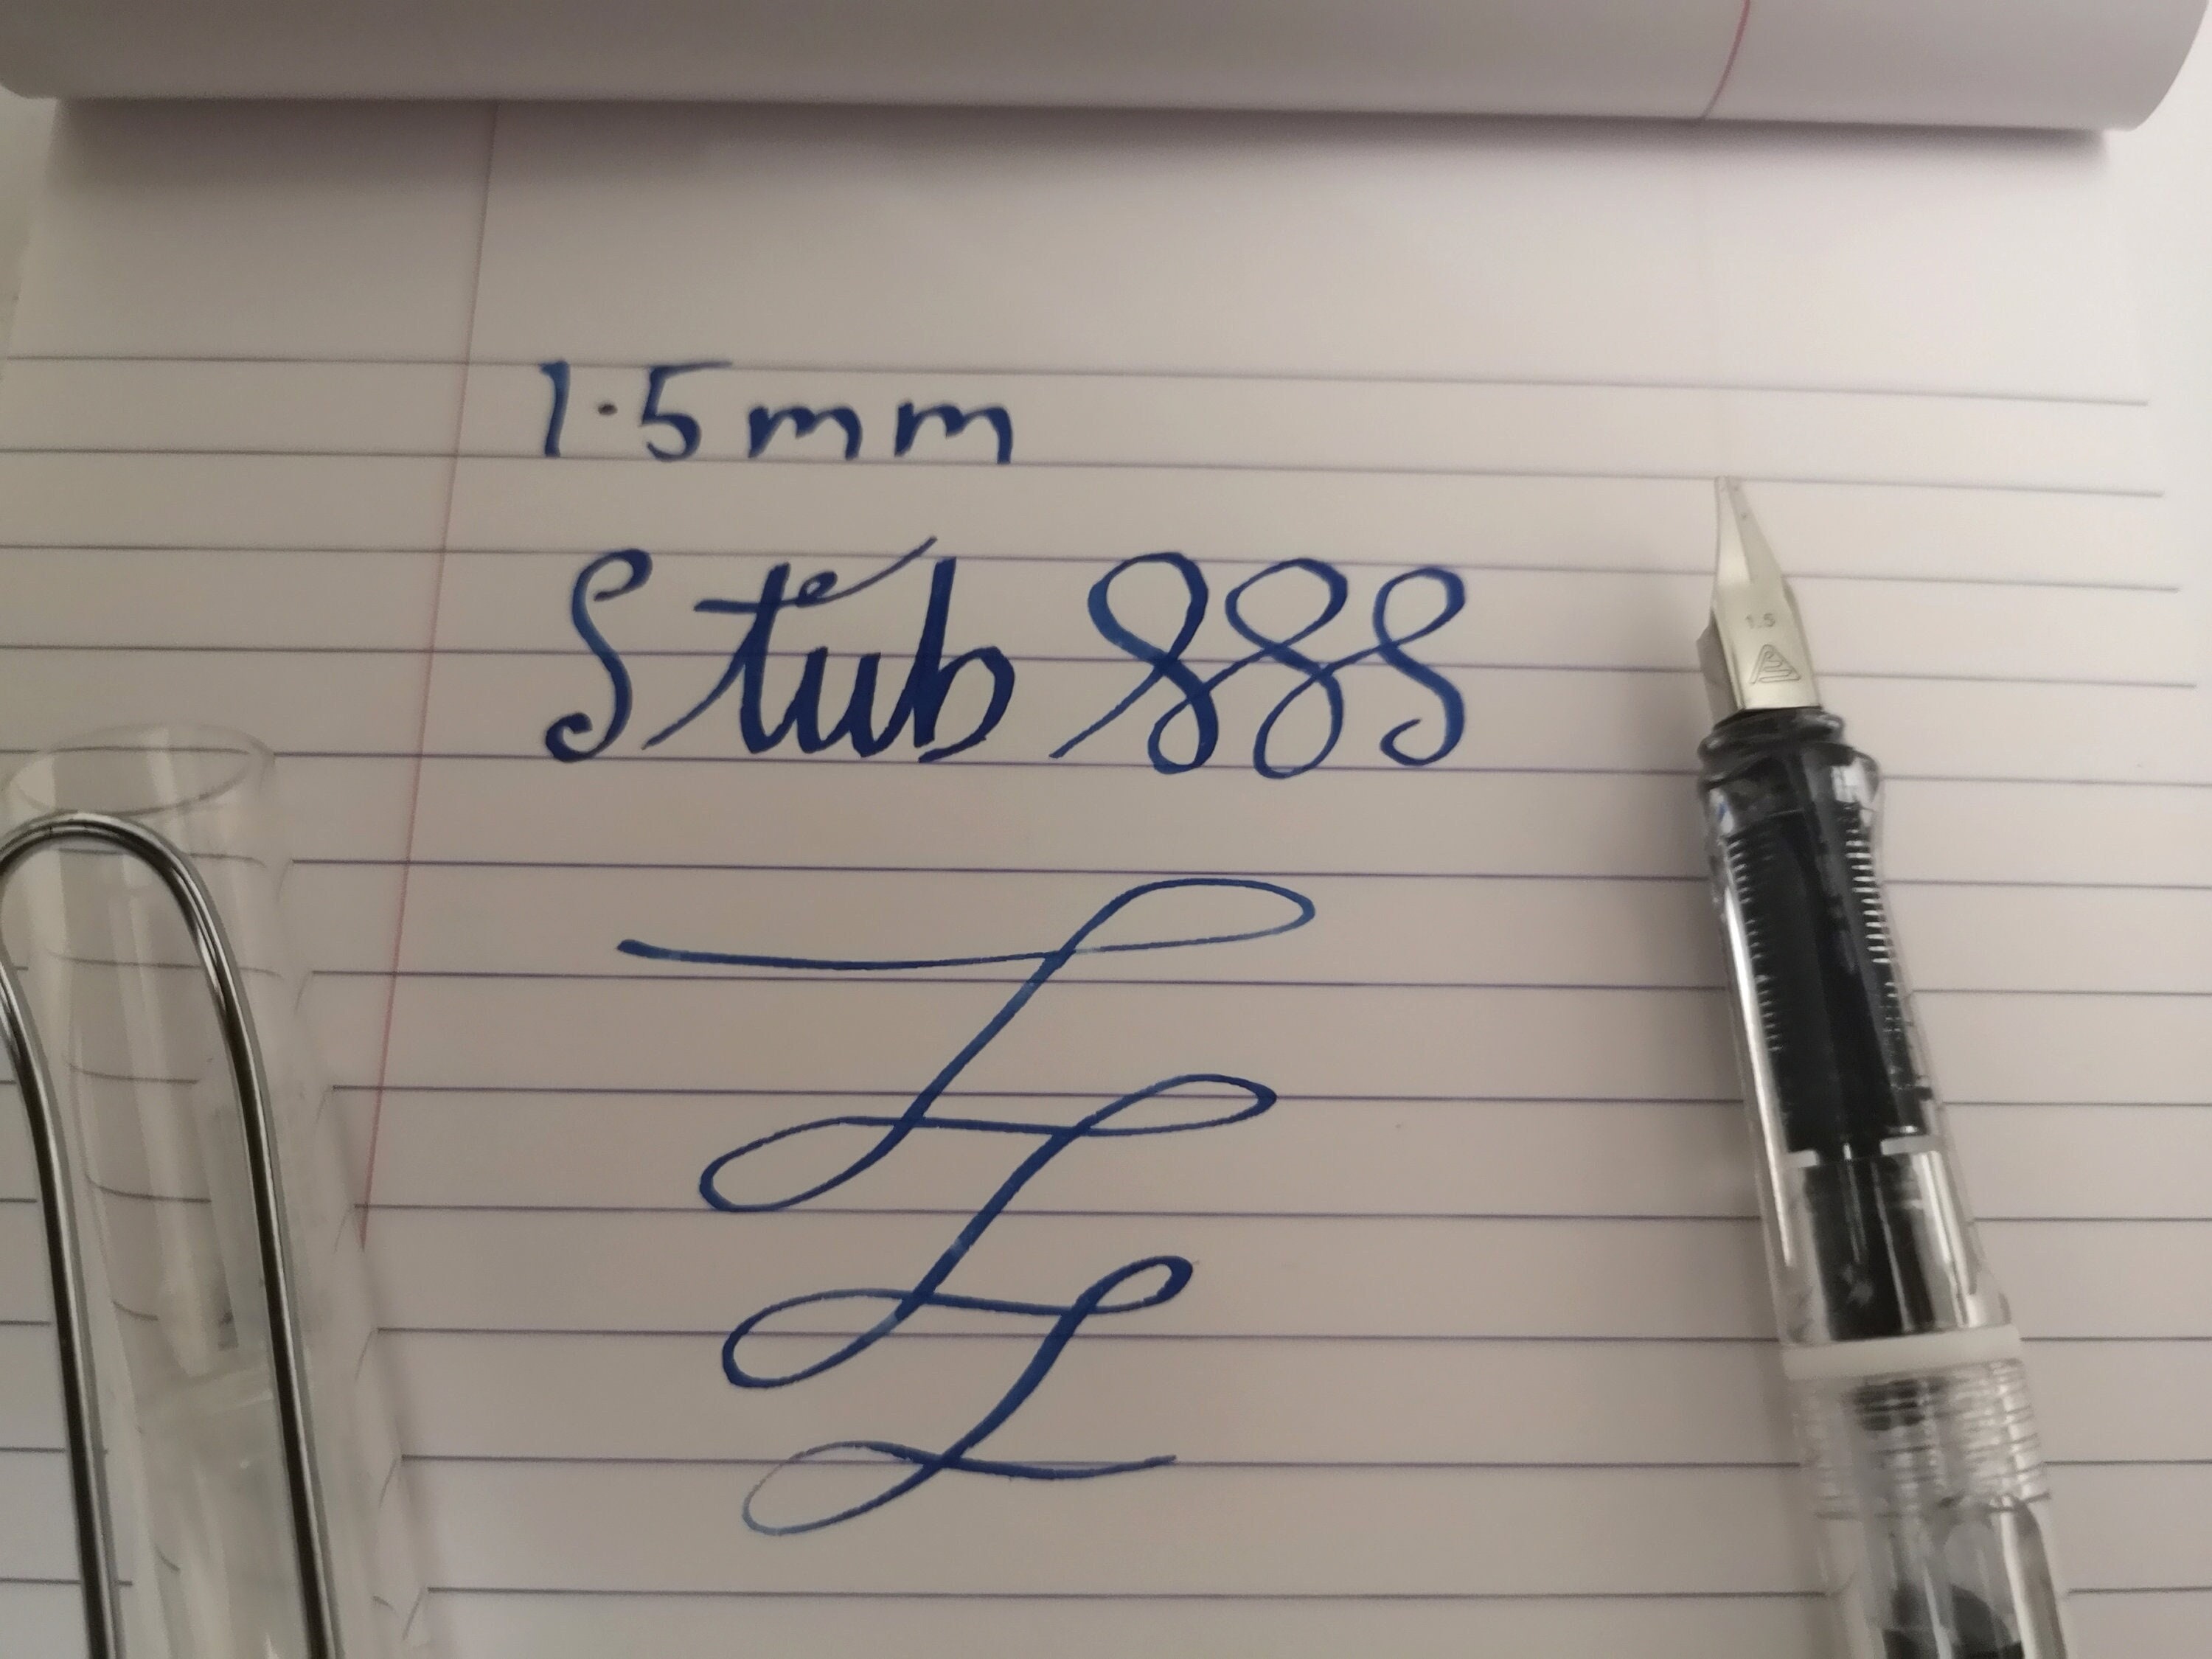 A fountain pen nib I modded to make flexible for calligraphy. No